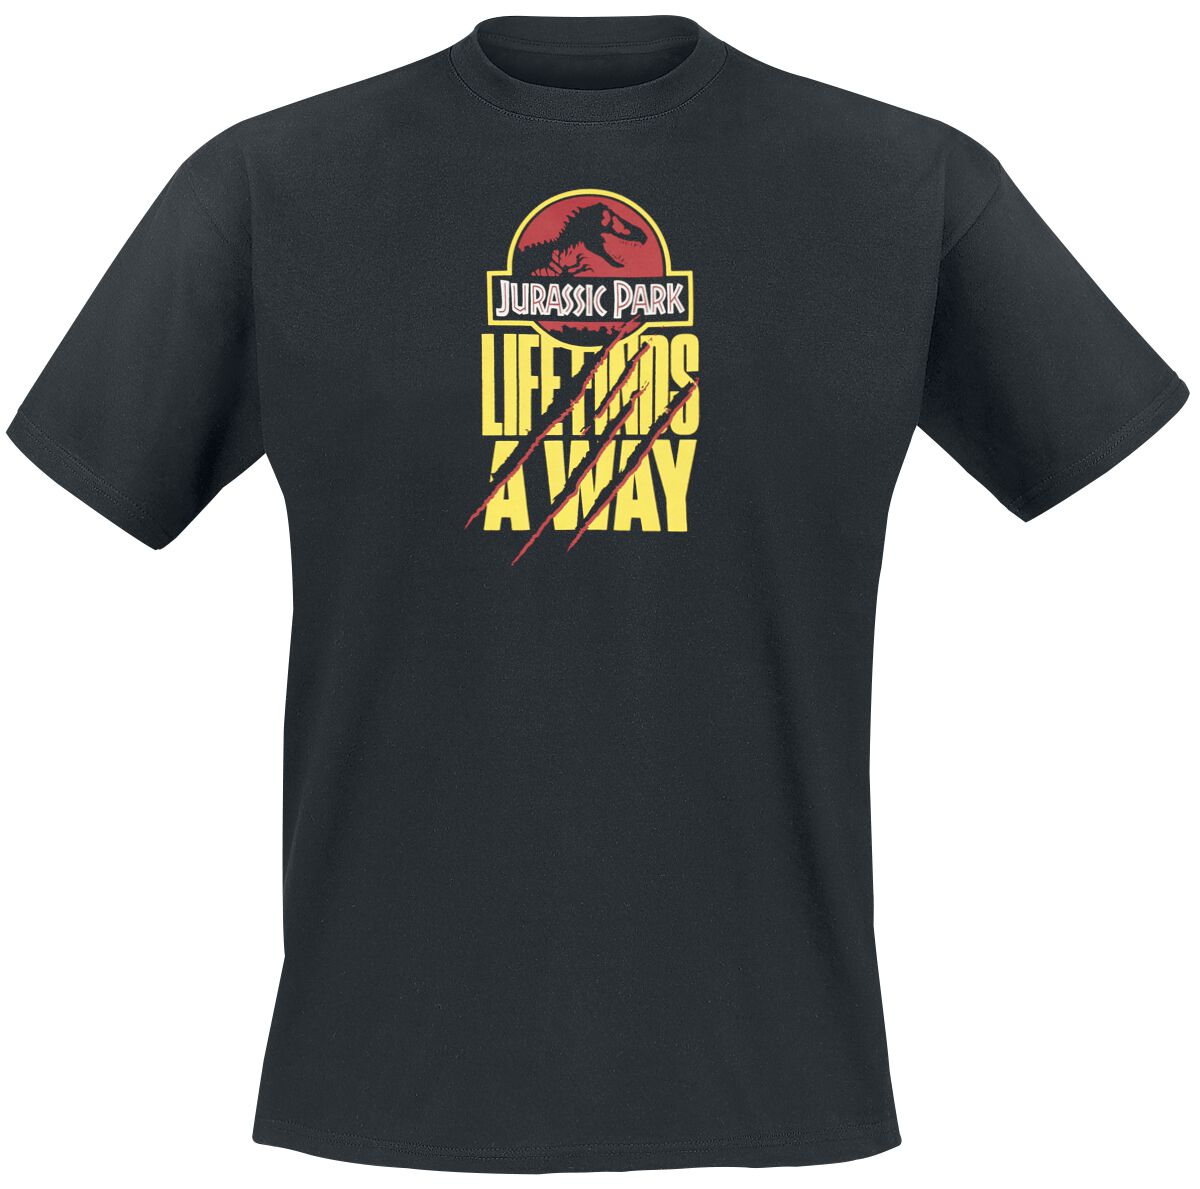 Jurassic Park Life Finds A Way T-Shirt schwarz in XL